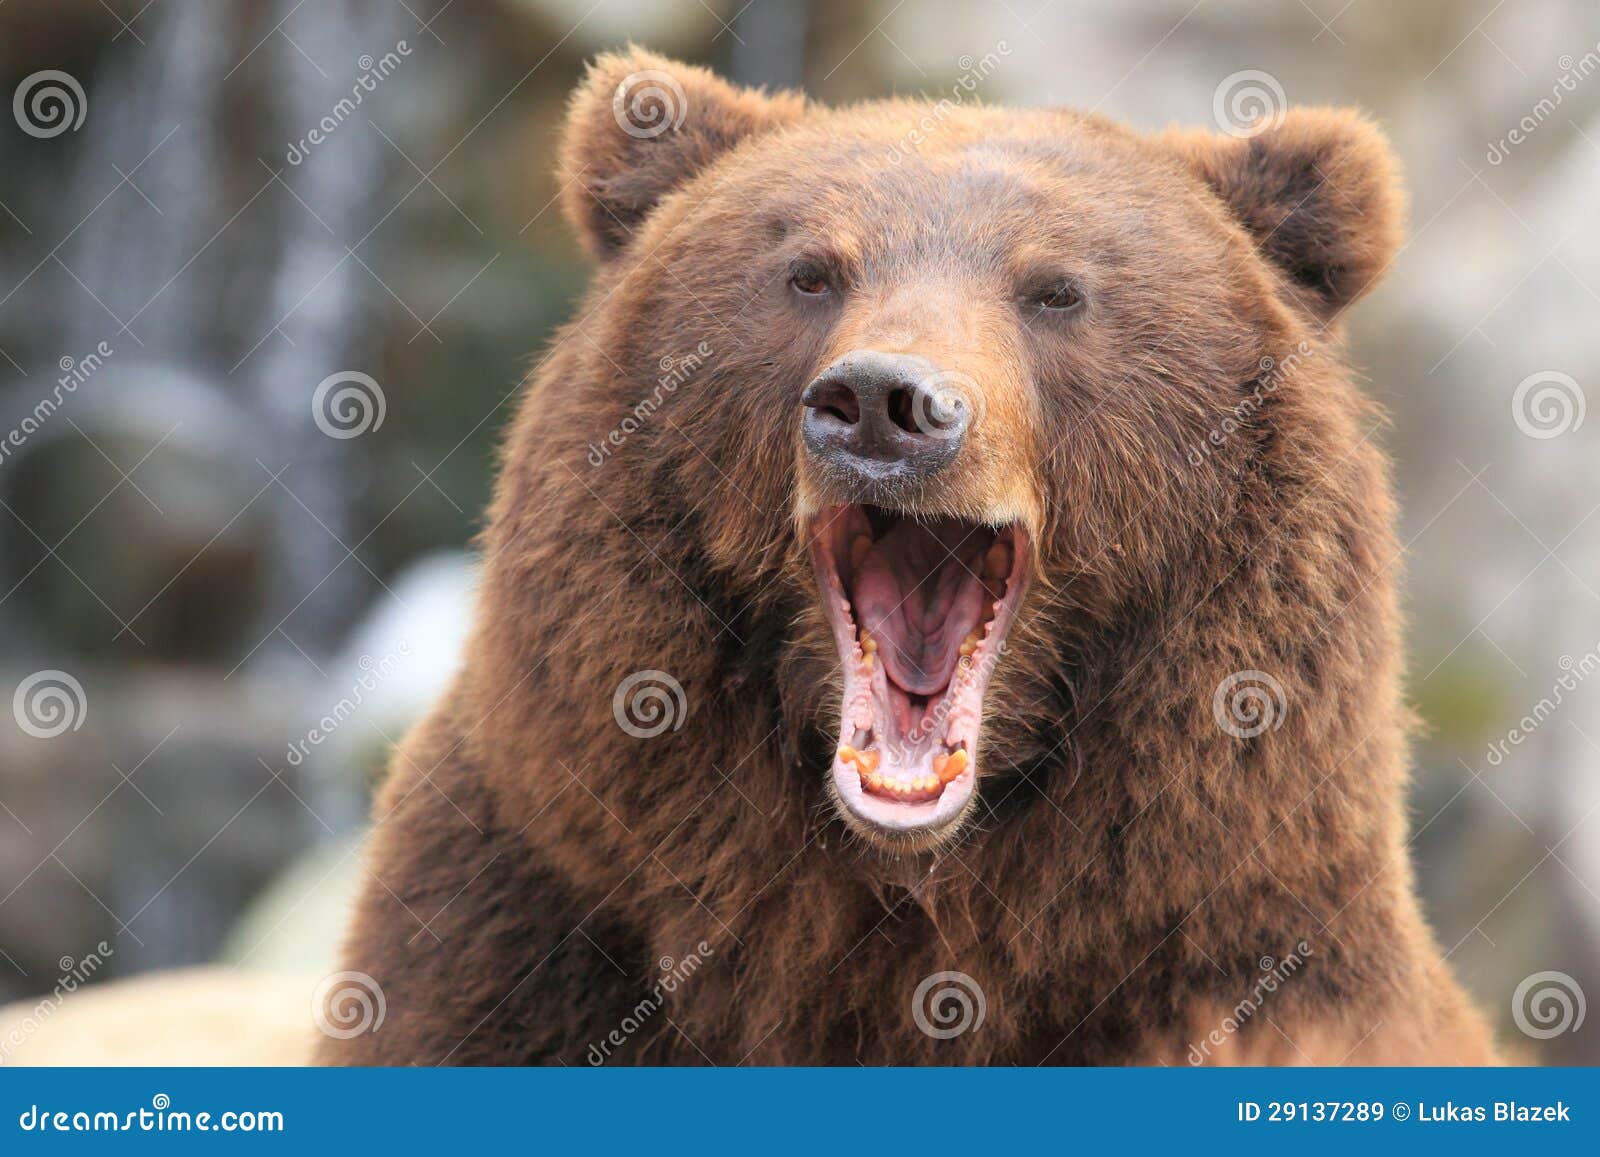 kamchatka brown bear